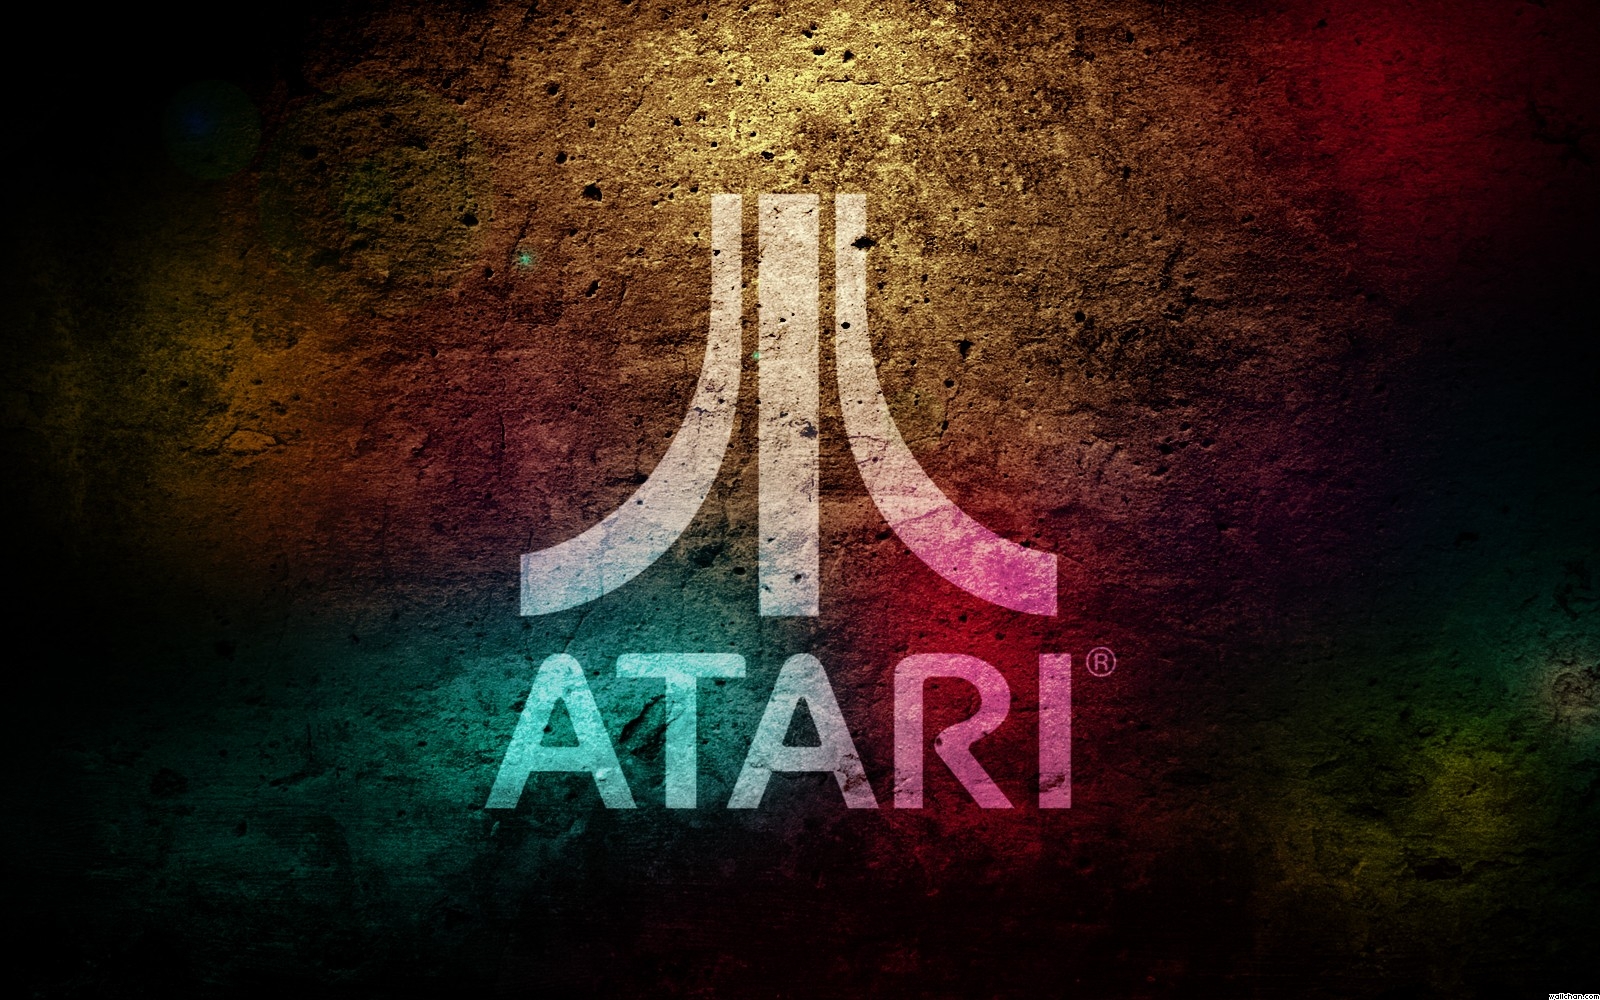 Atari Gallery